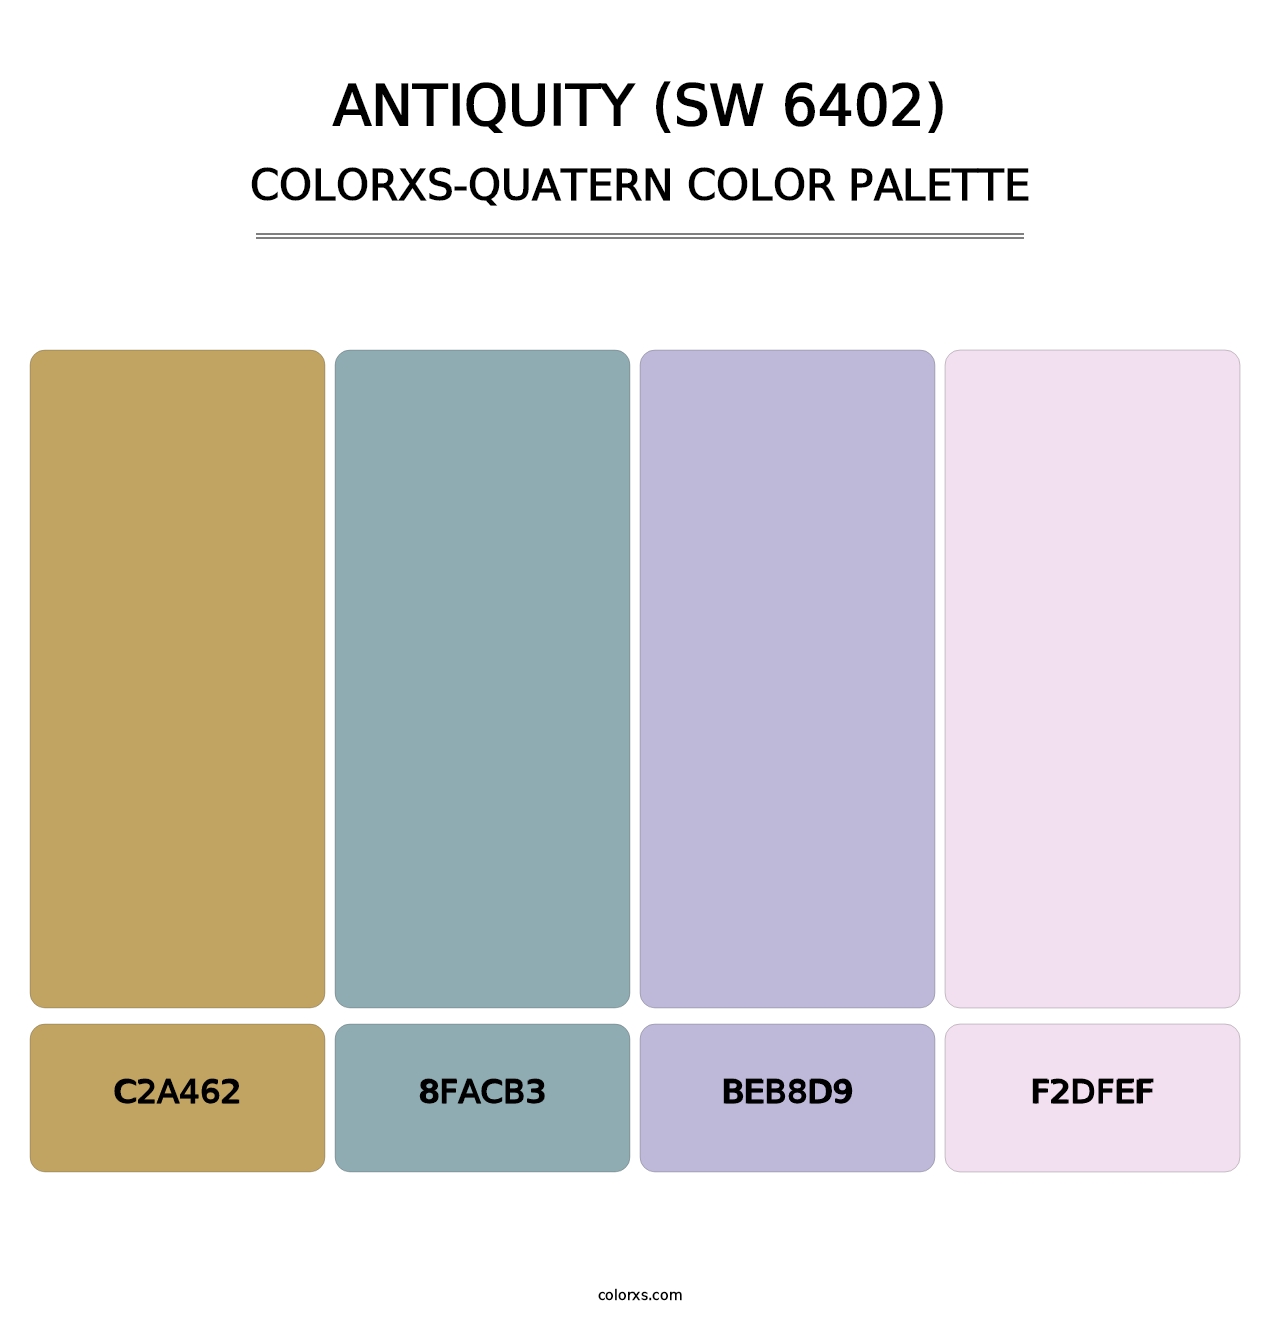 Antiquity (SW 6402) - Colorxs Quatern Palette